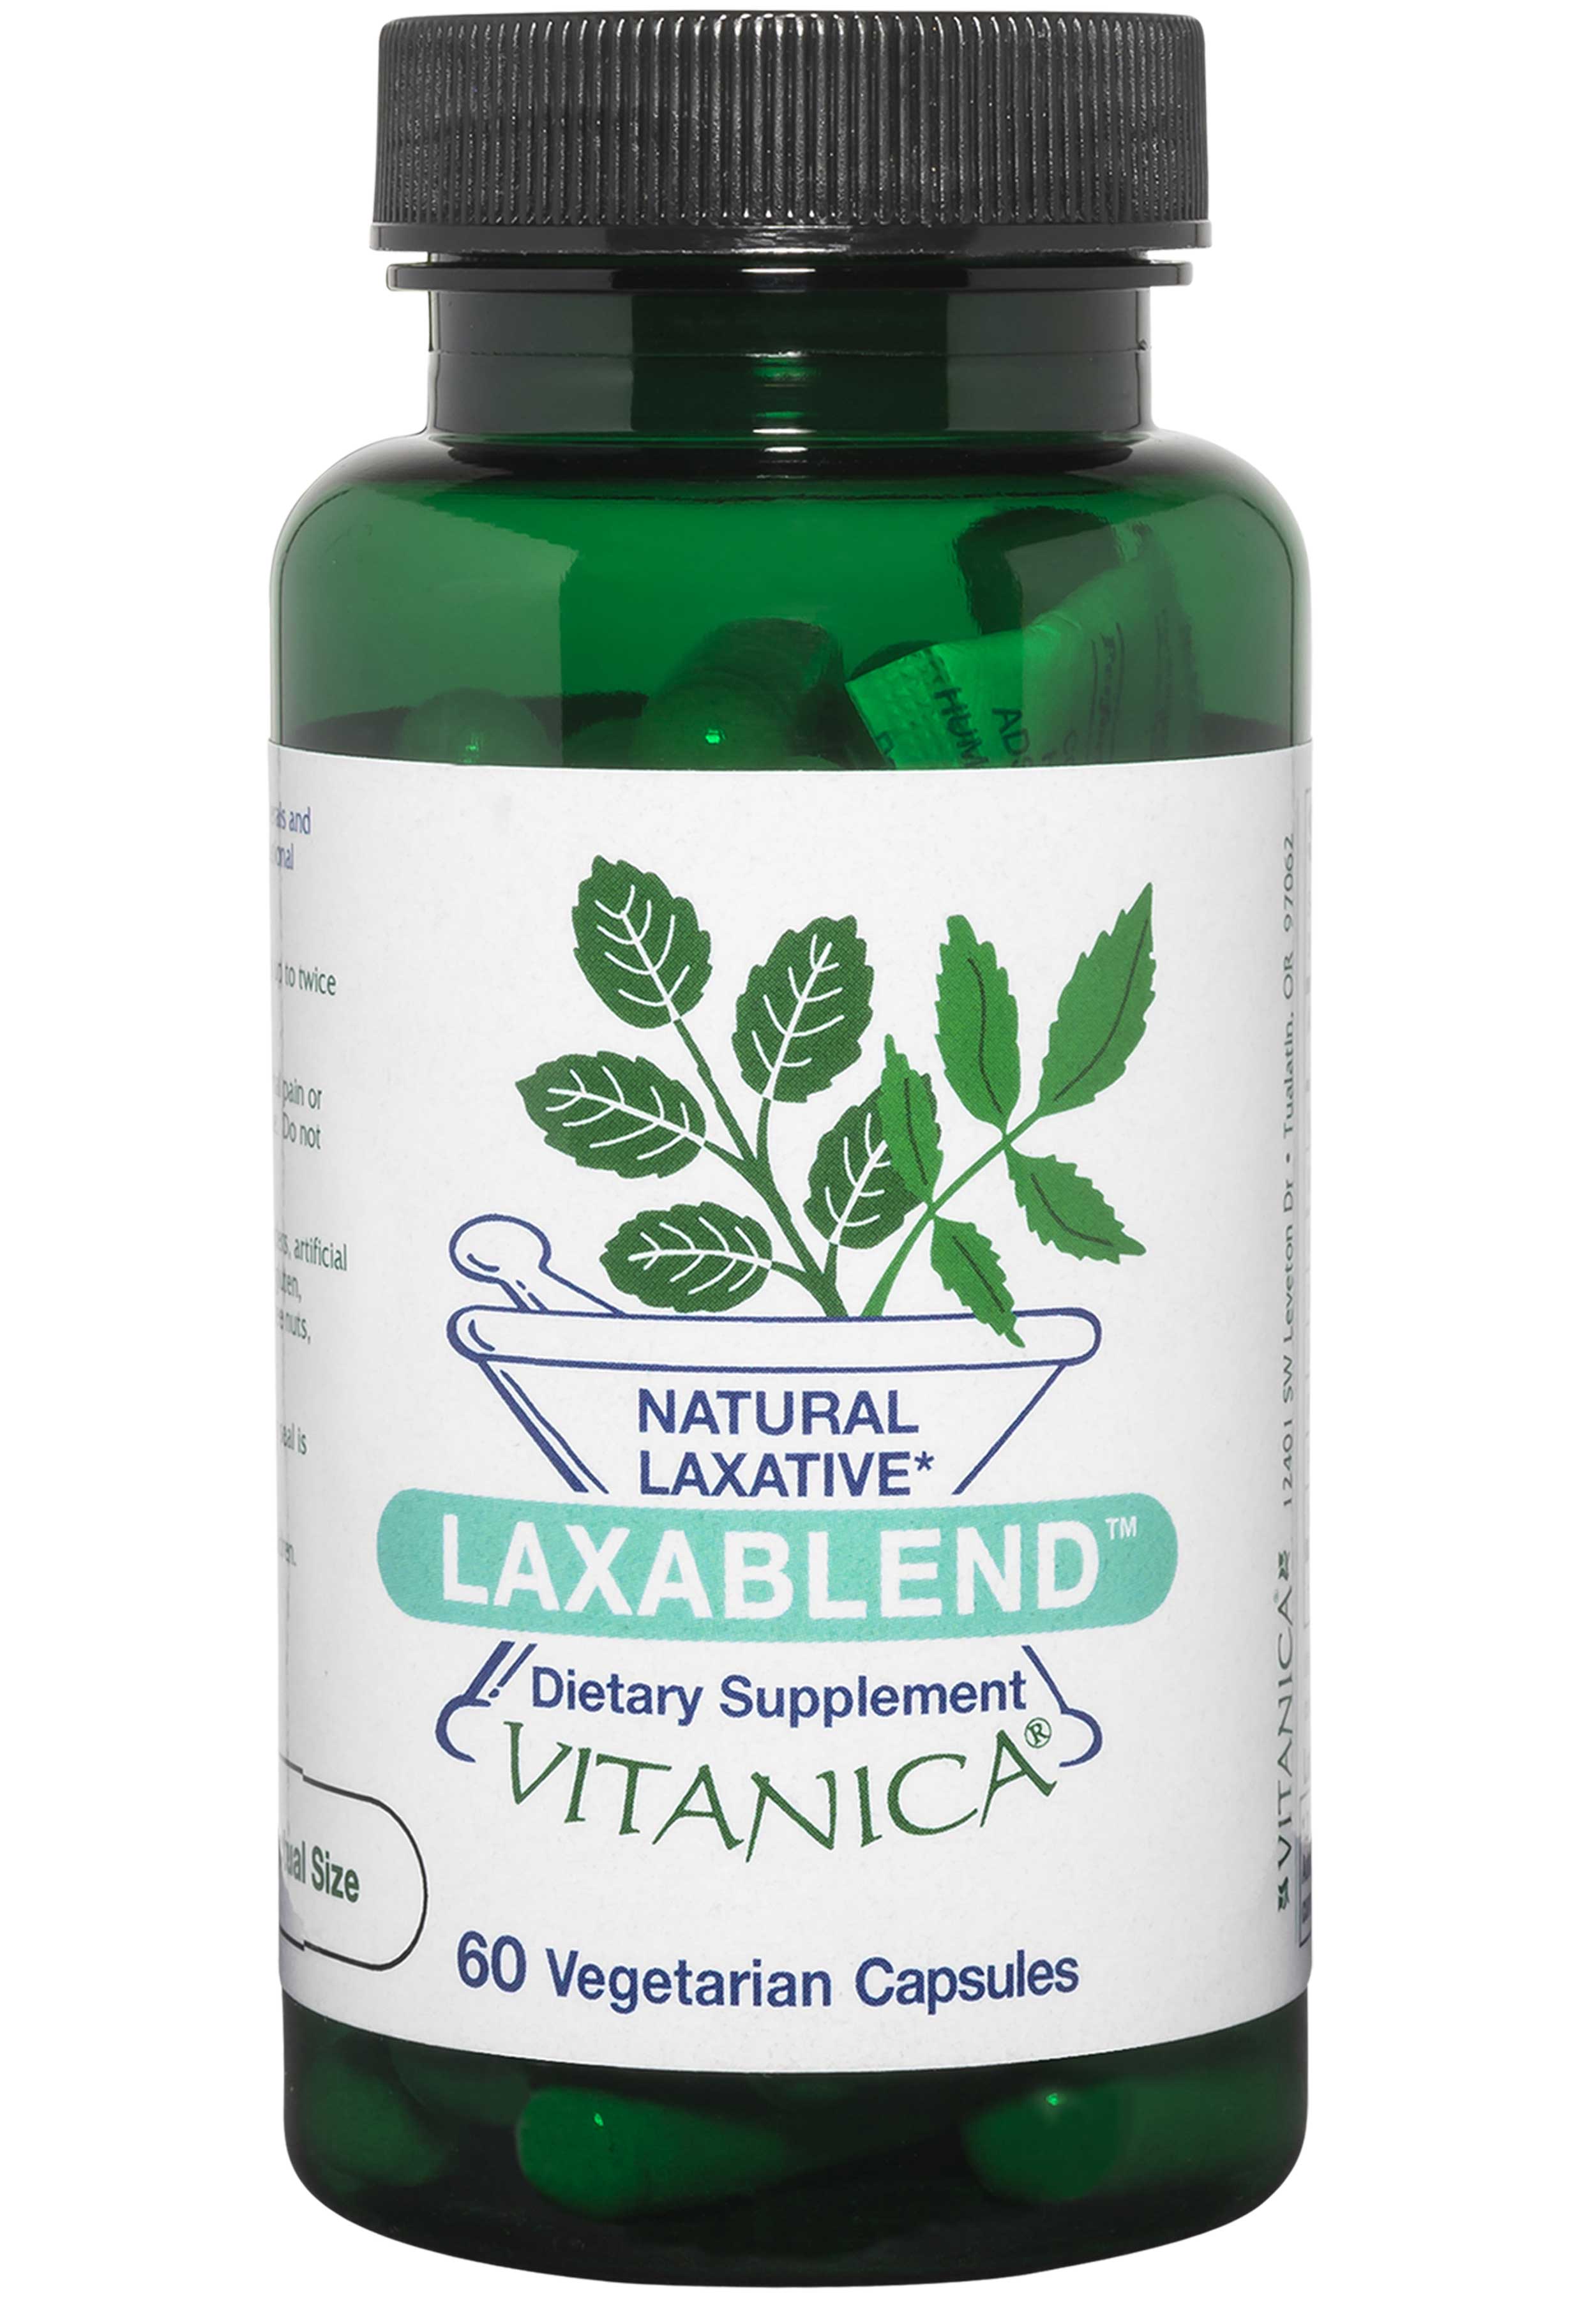 Vitanica LaxaBlend